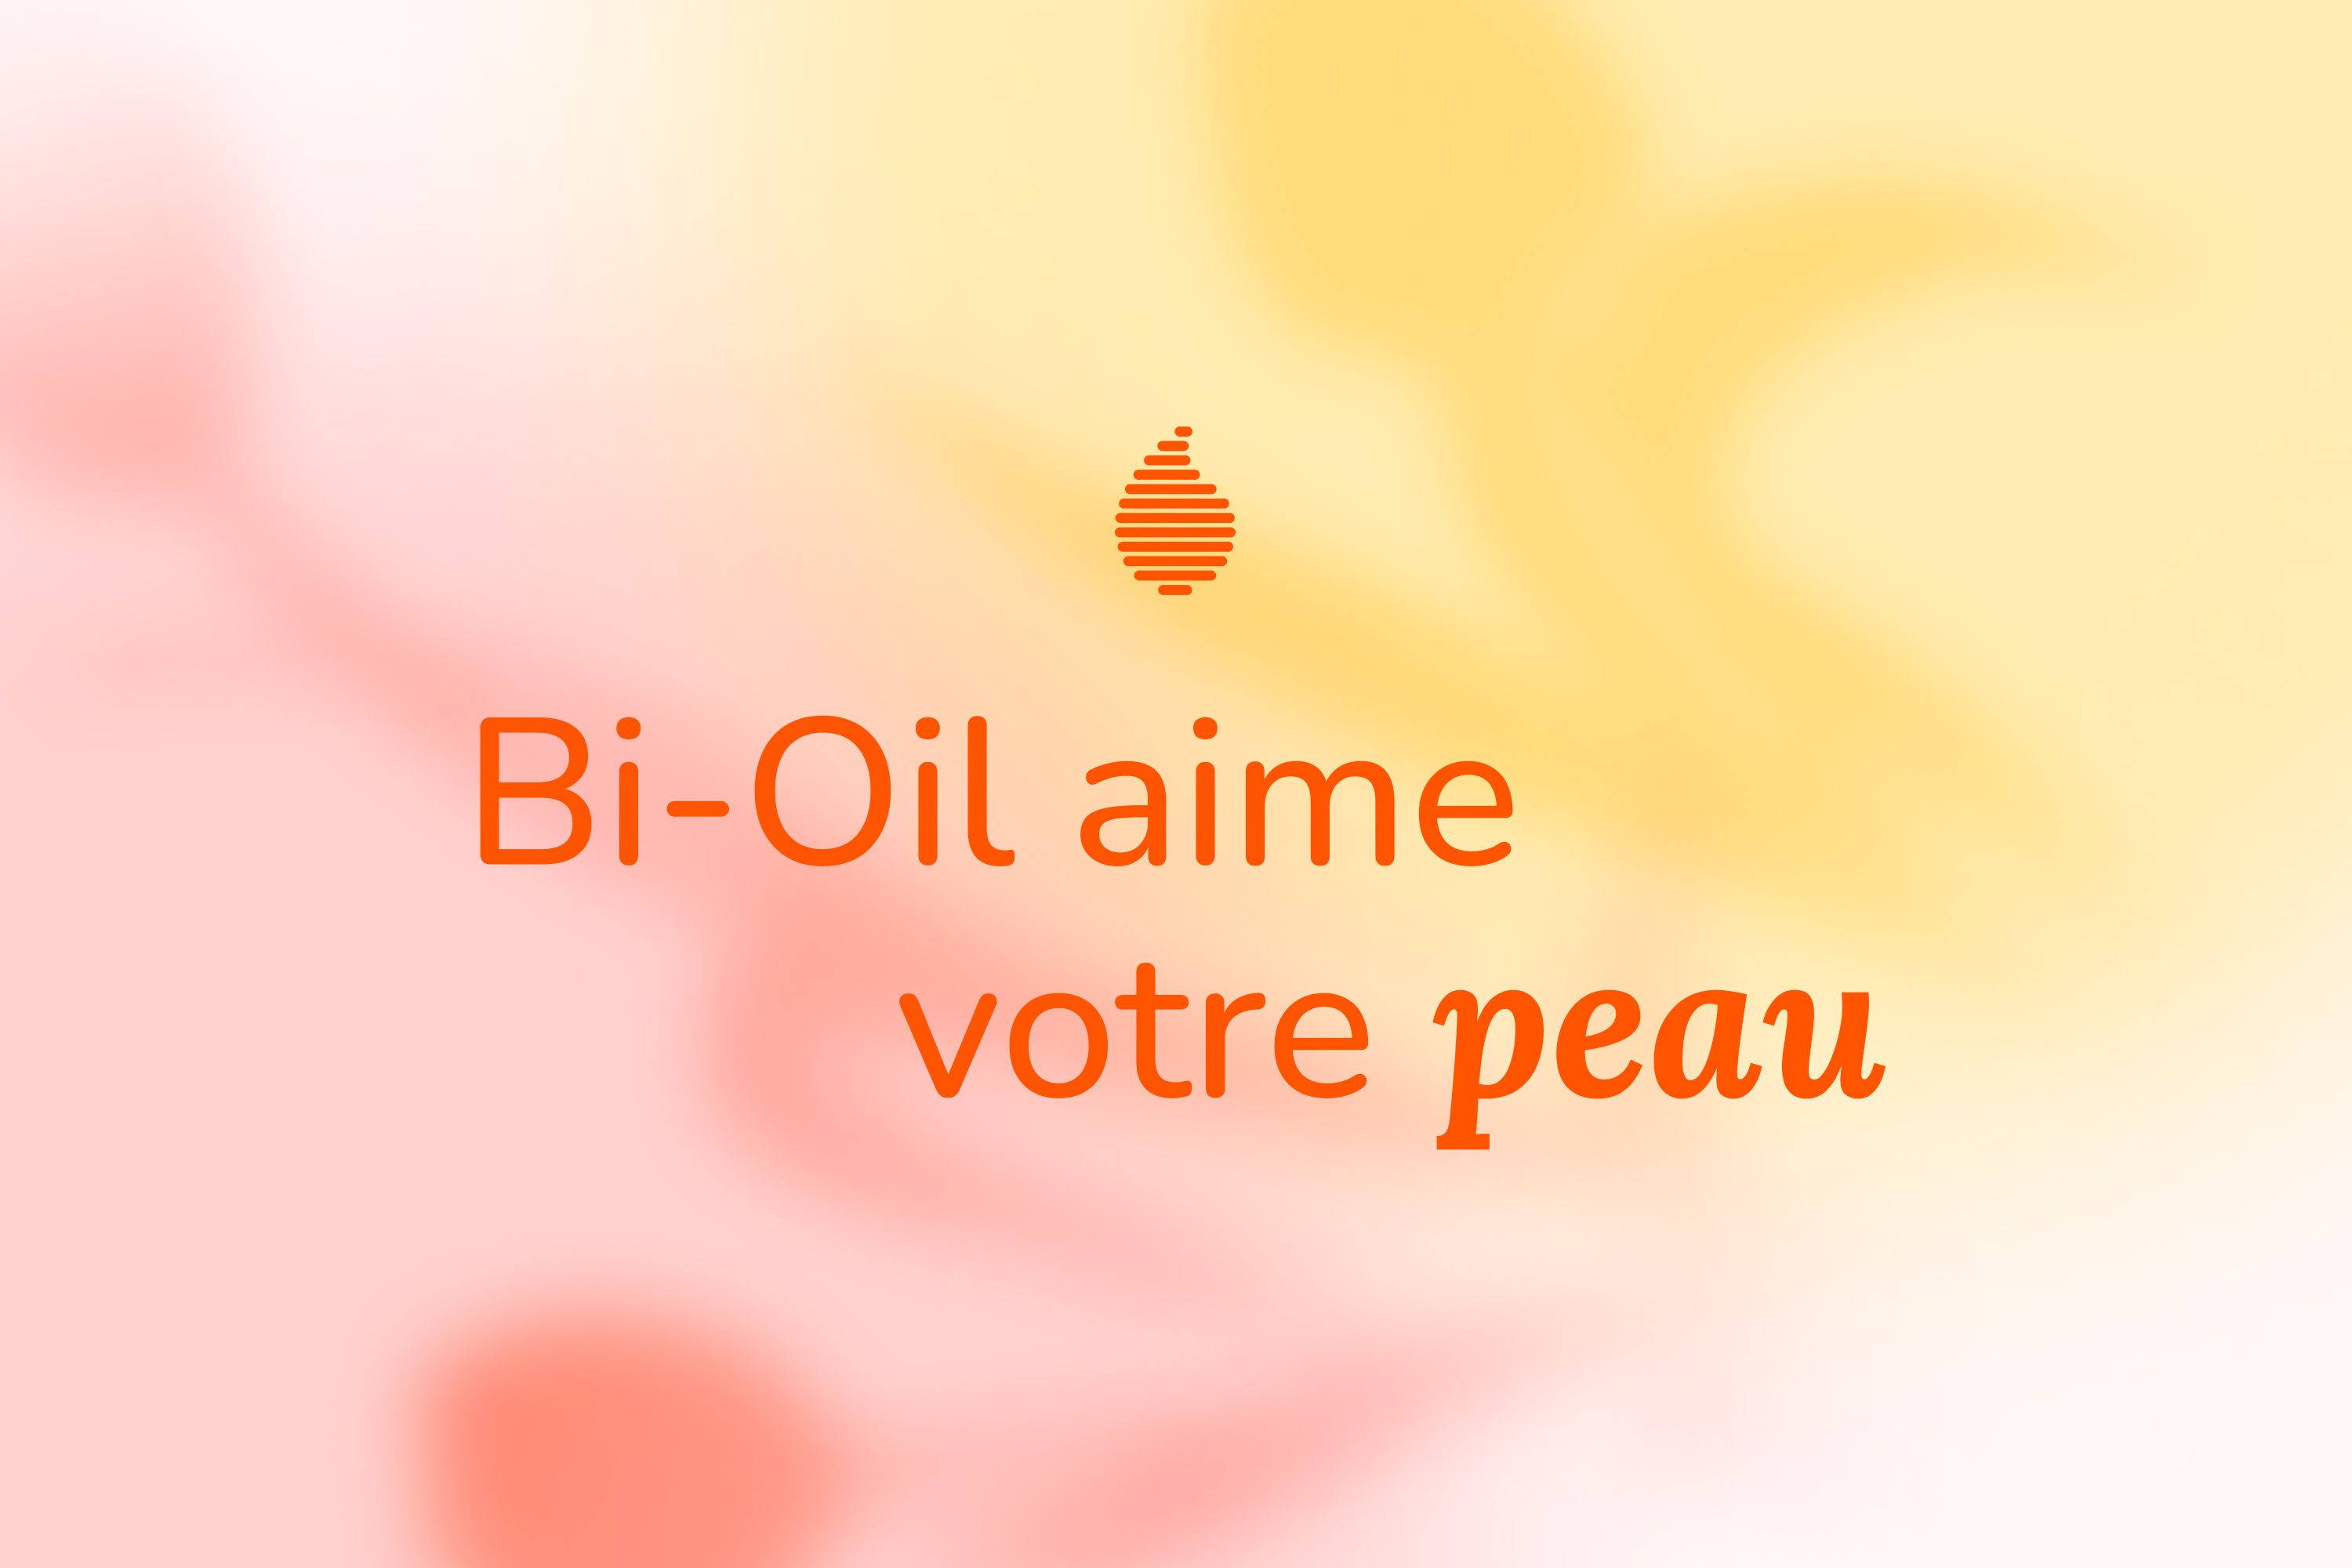 Bi-Oil et Castor & Pollux